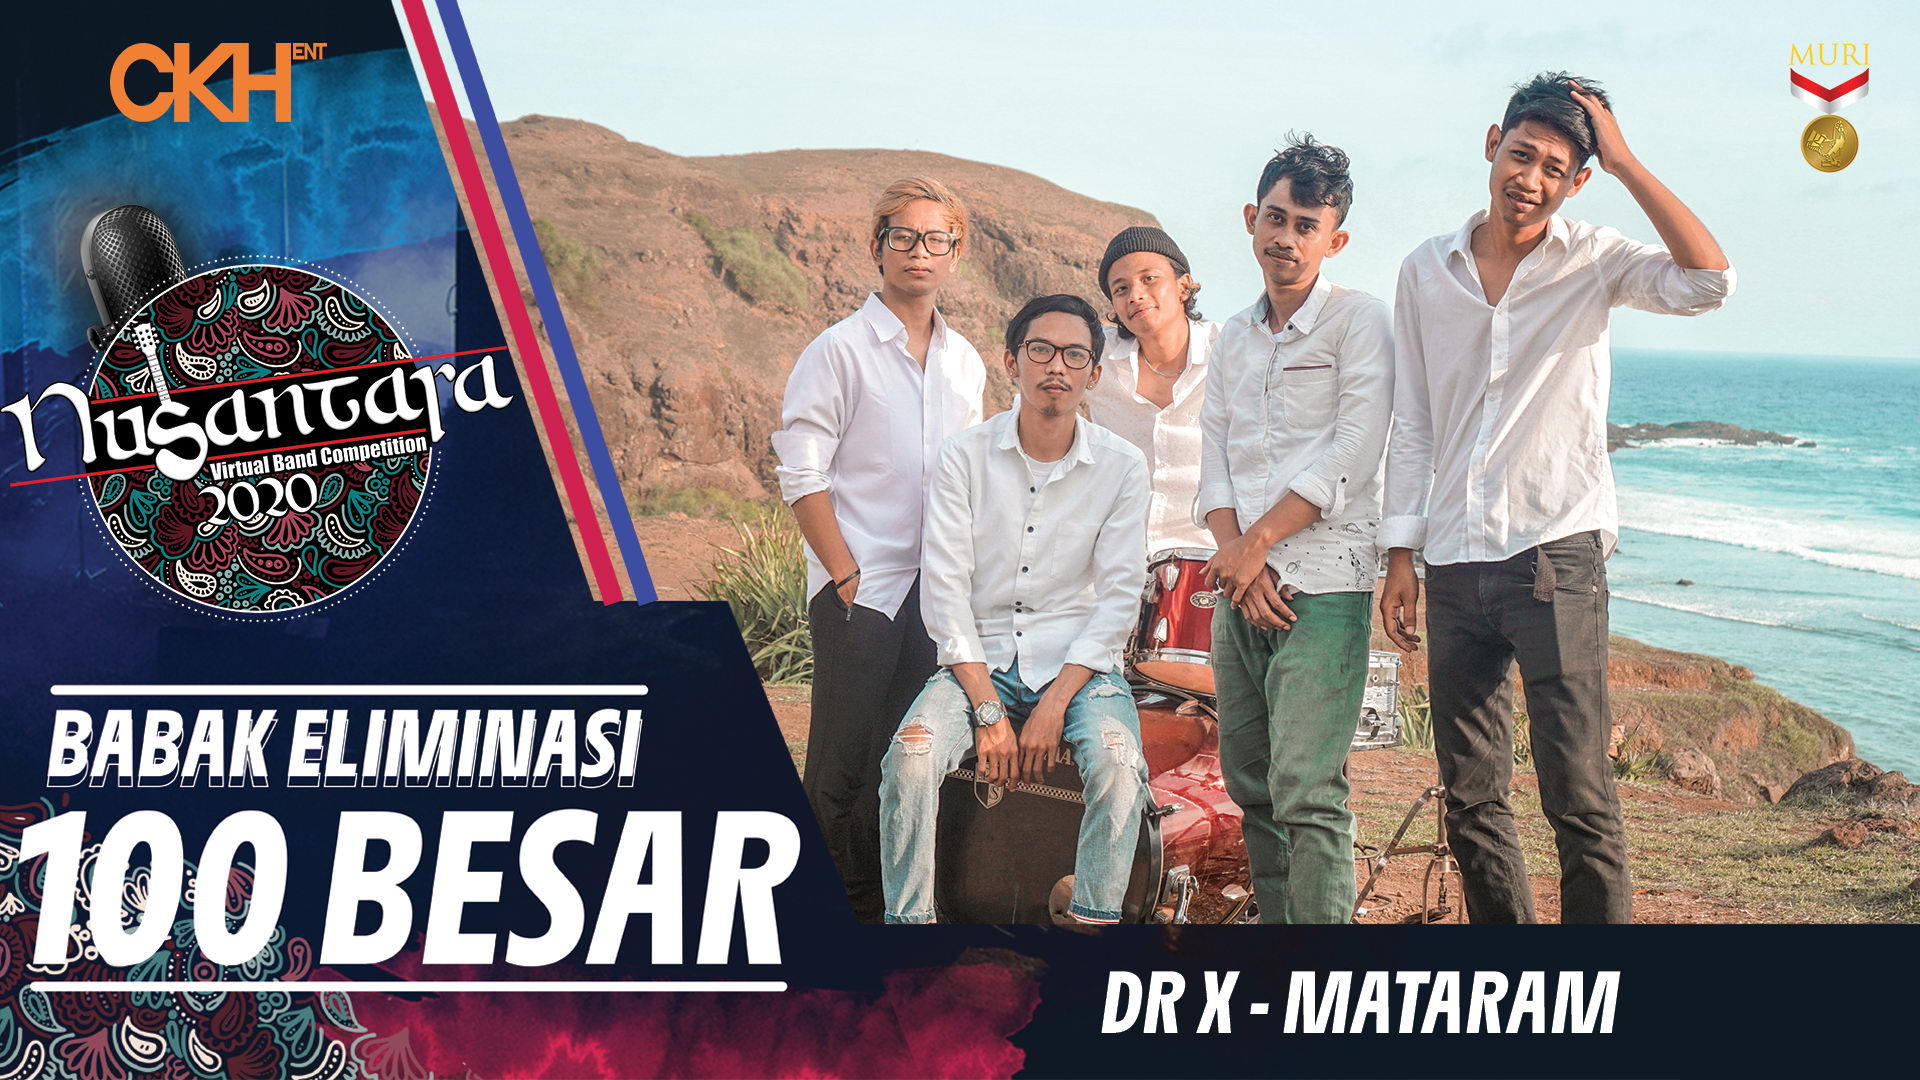 DR X - Eliminasi 100 Besar Nusantara Virtual Band Competition